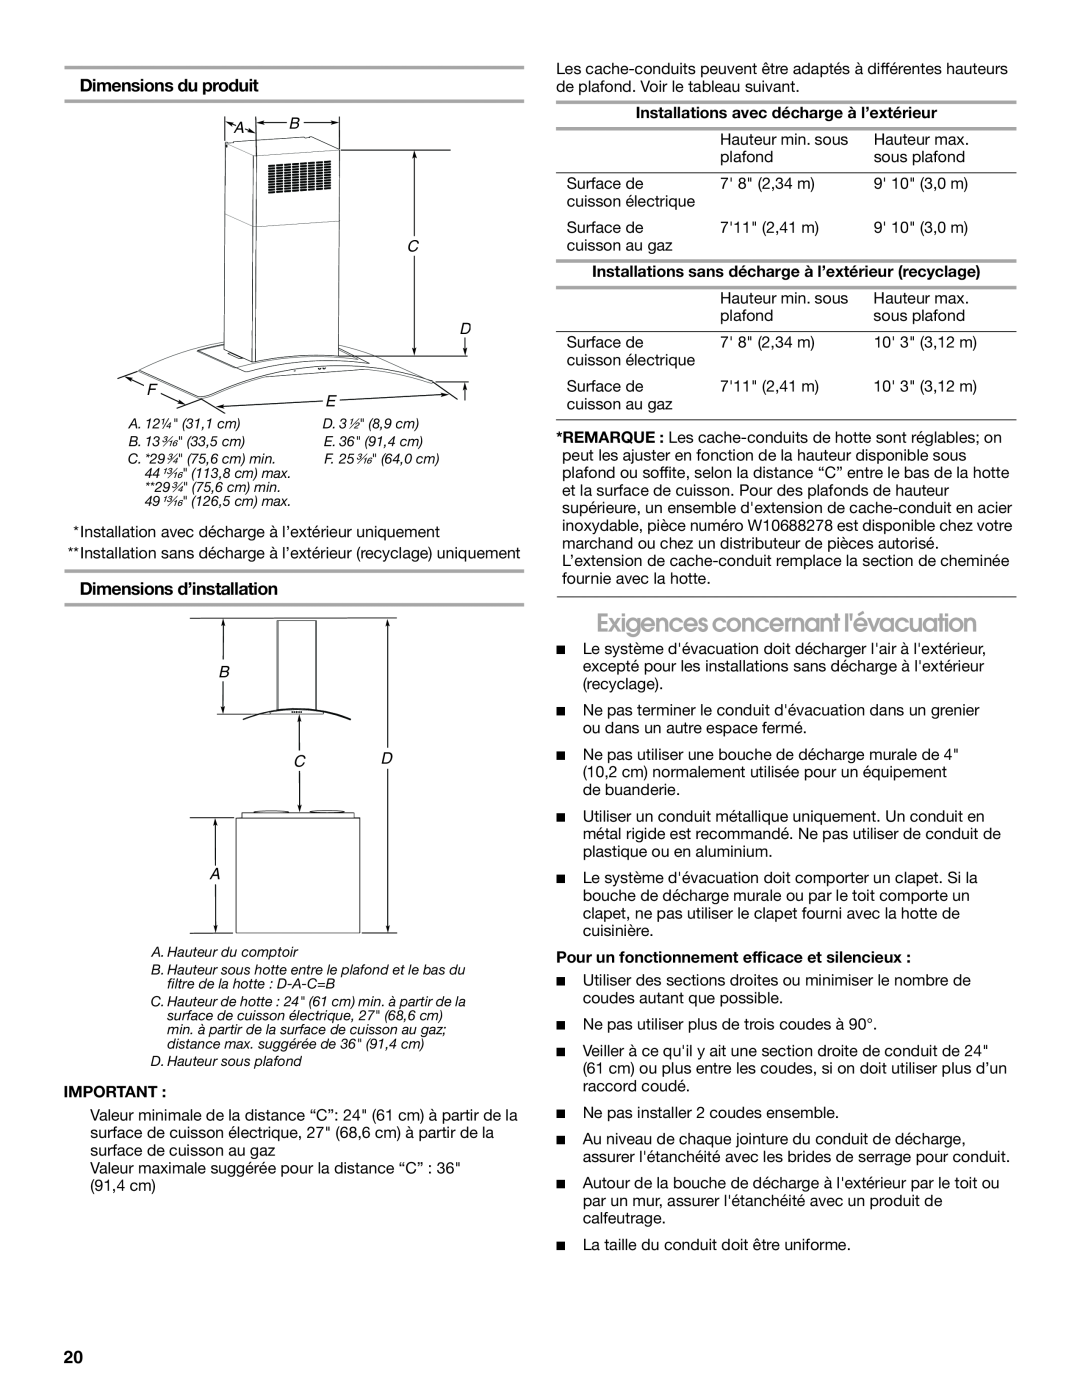 Whirlpool LI31HC/W10526058F Exigences concernant lévacuation, Dimensions du produit, Dimensions d’installation, A B C D F 